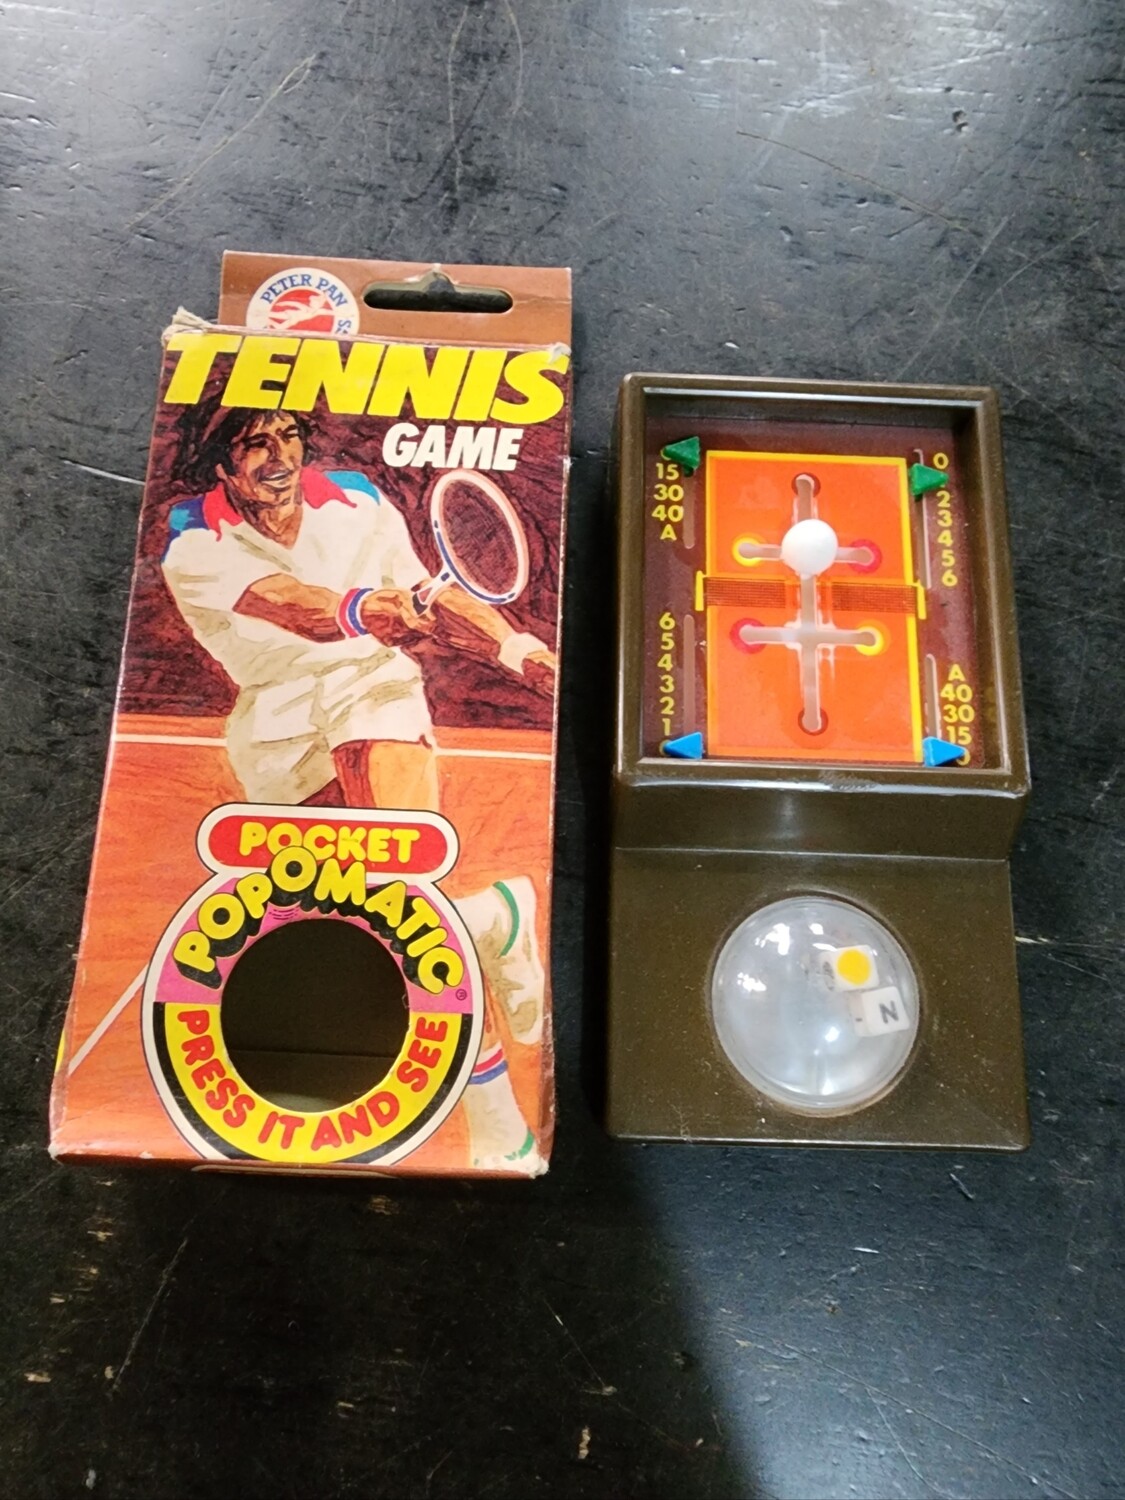 POCKET POPOMATIC TENNIS GAME 1970'S